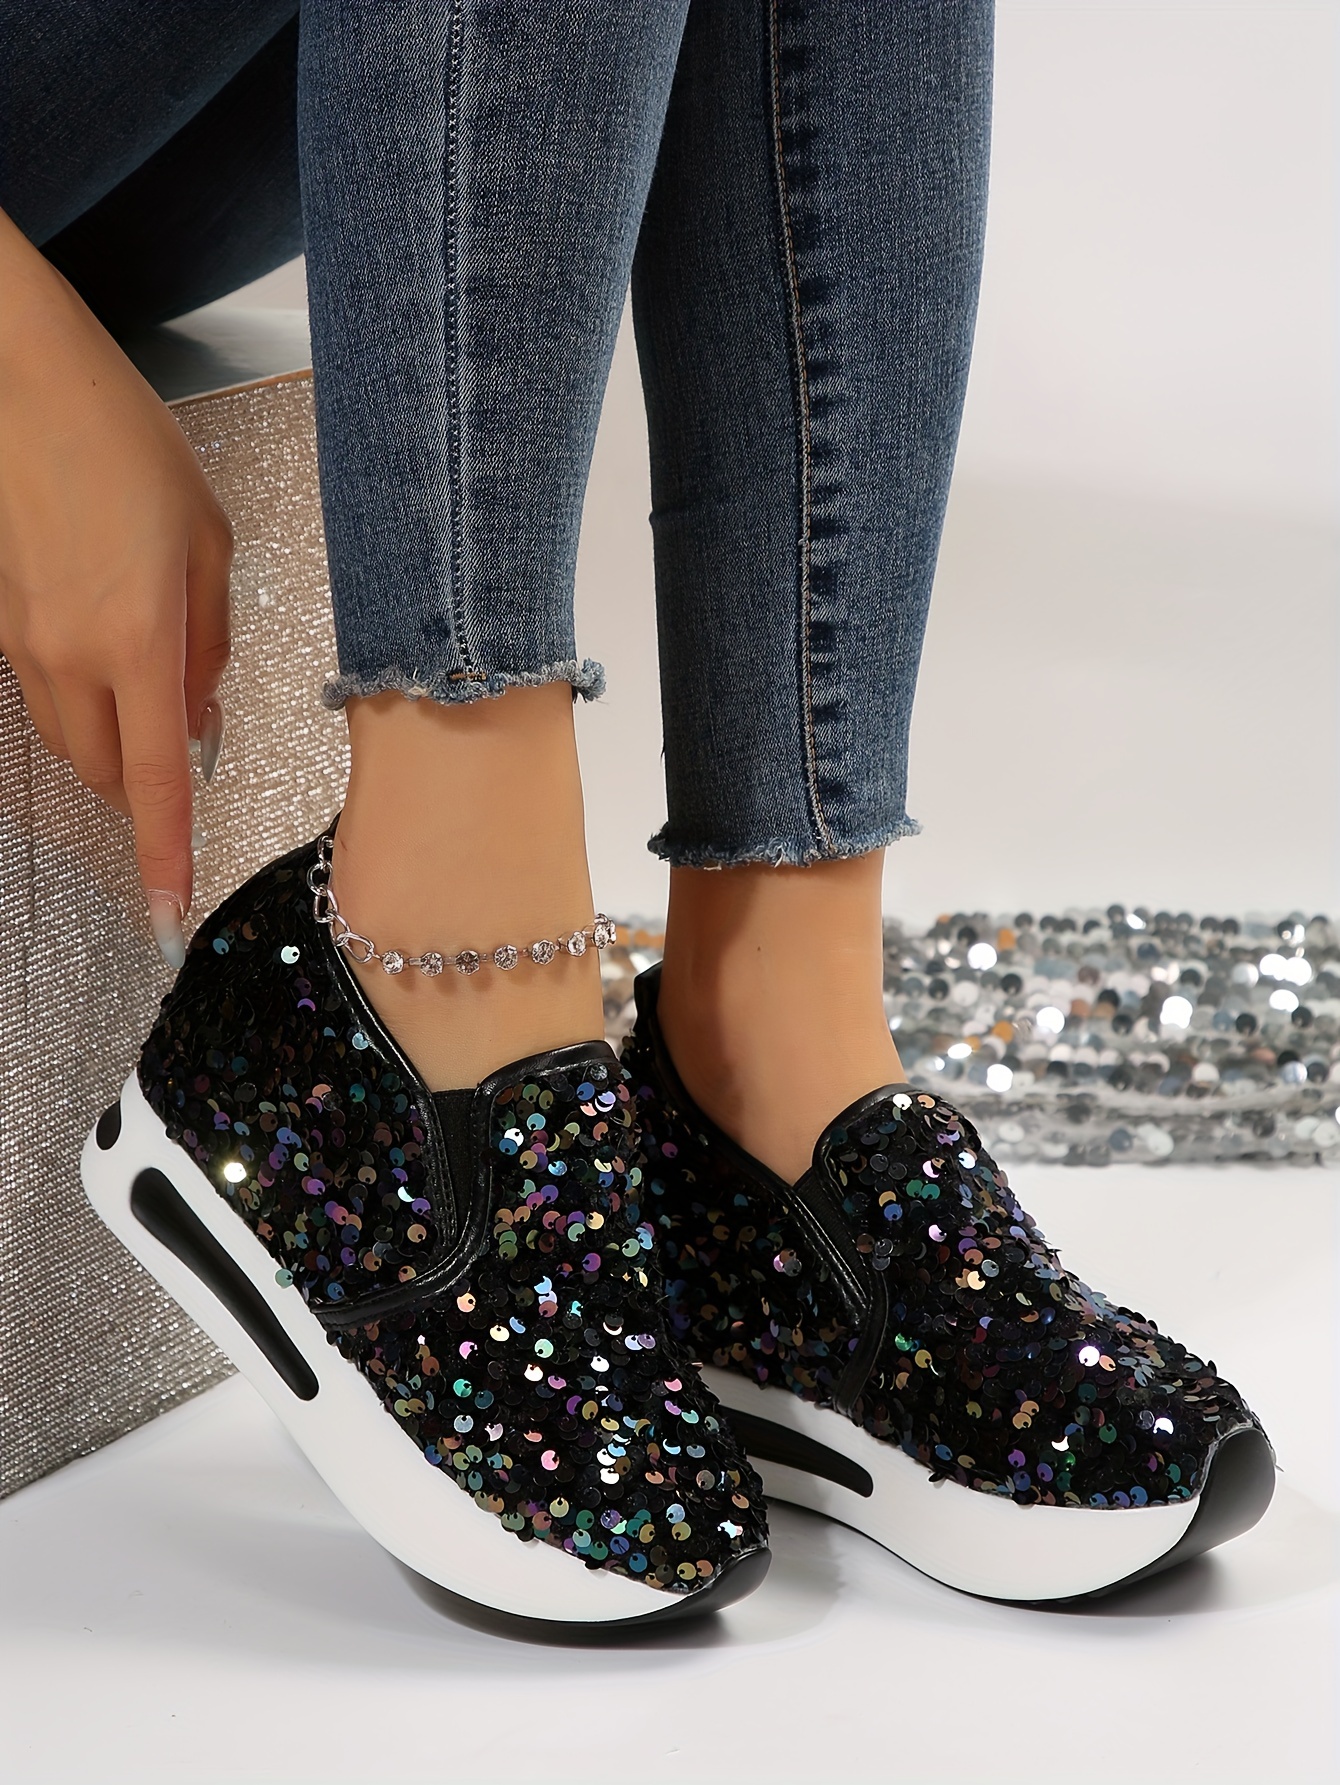 Simanlan Women's Casual Platform Rhinestones Glitter Slip on Sneakers Flat Walking Shoes, Size: 11, Black